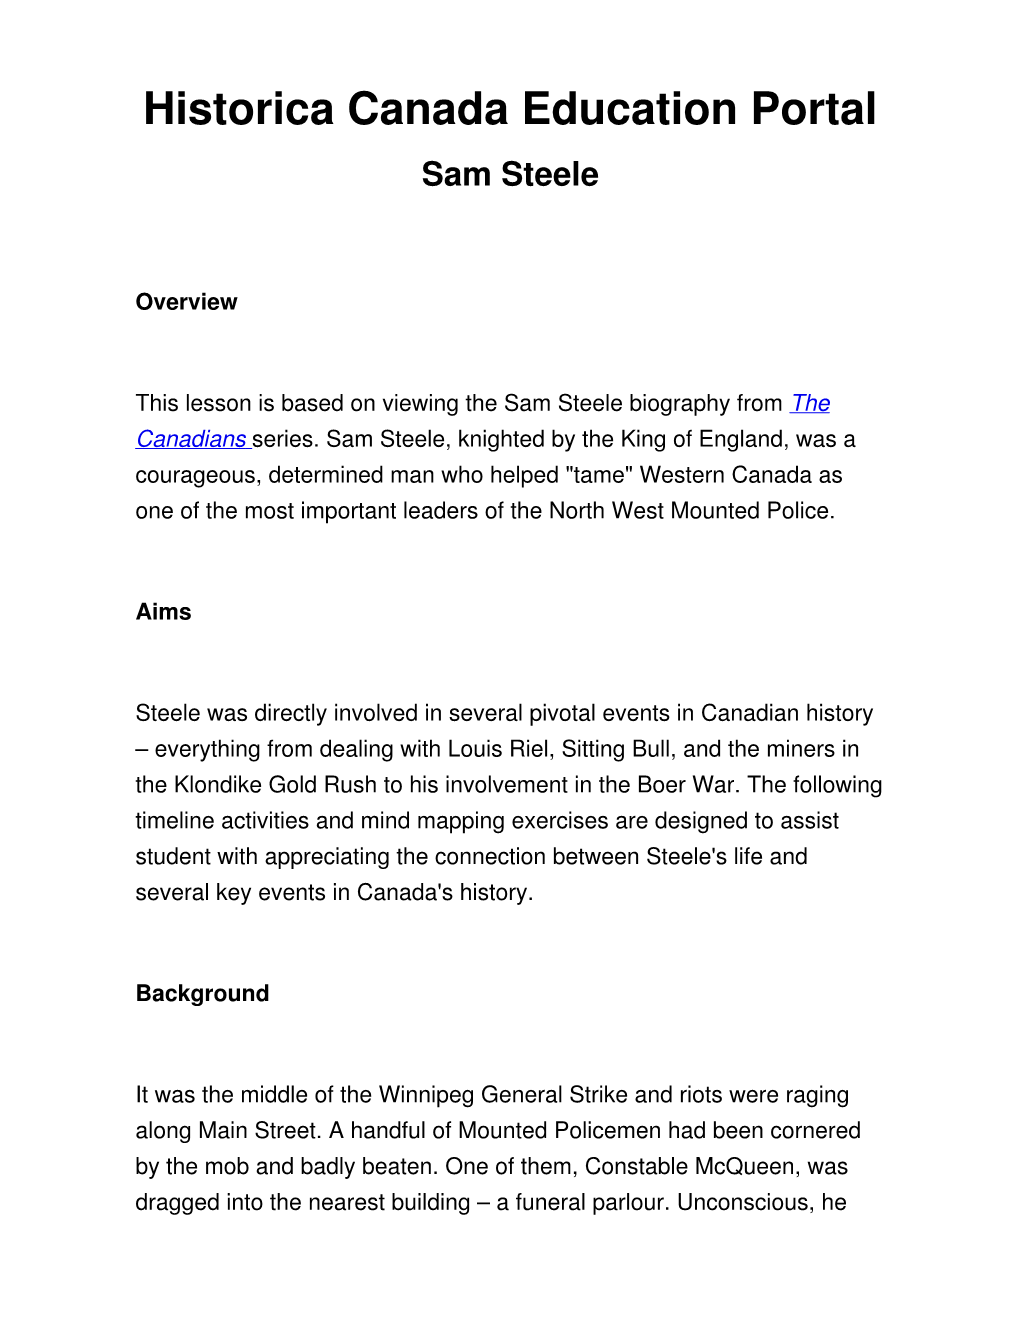 Historica Canada Education Portal Sam Steele